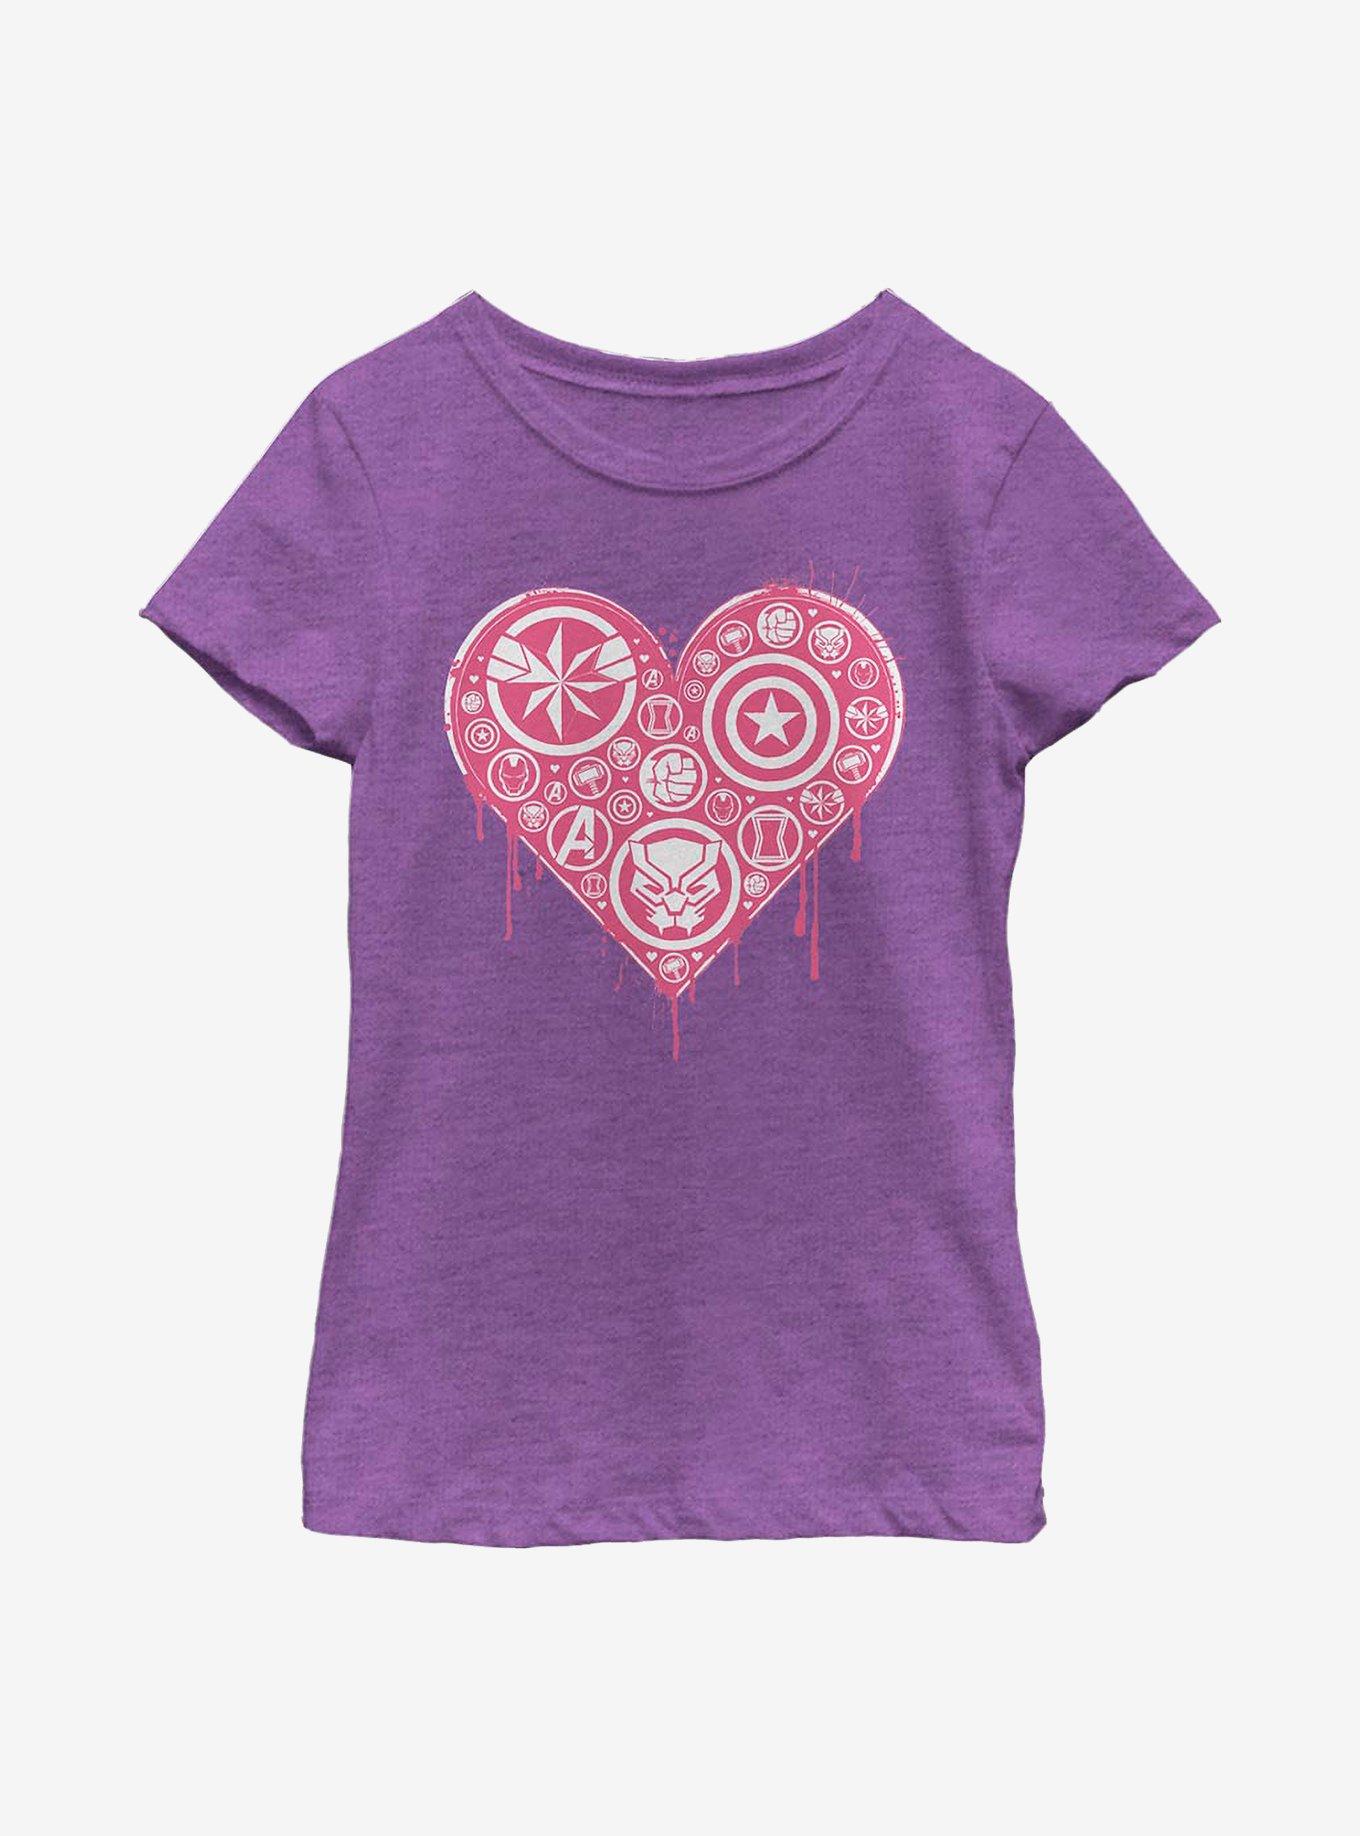 Marvel Avengers Heart Emblems Youth Girls T-Shirt, PURPLE BERRY, hi-res